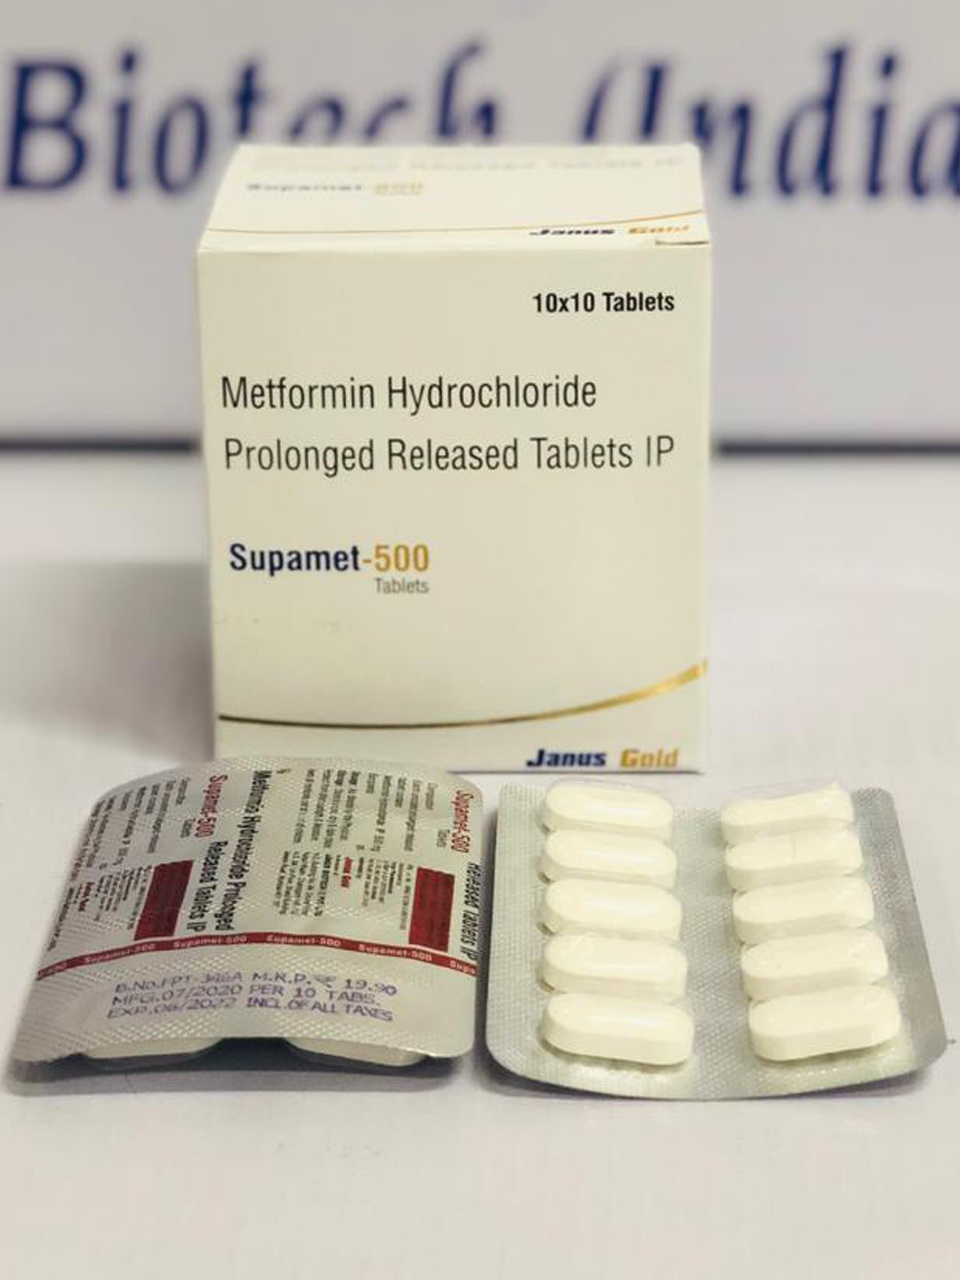 Product Name: Supamet 500, Compositions of Supamet 500 are Metformin Hydrochloride Prolonged Release Tablets IP - Janus Biotech